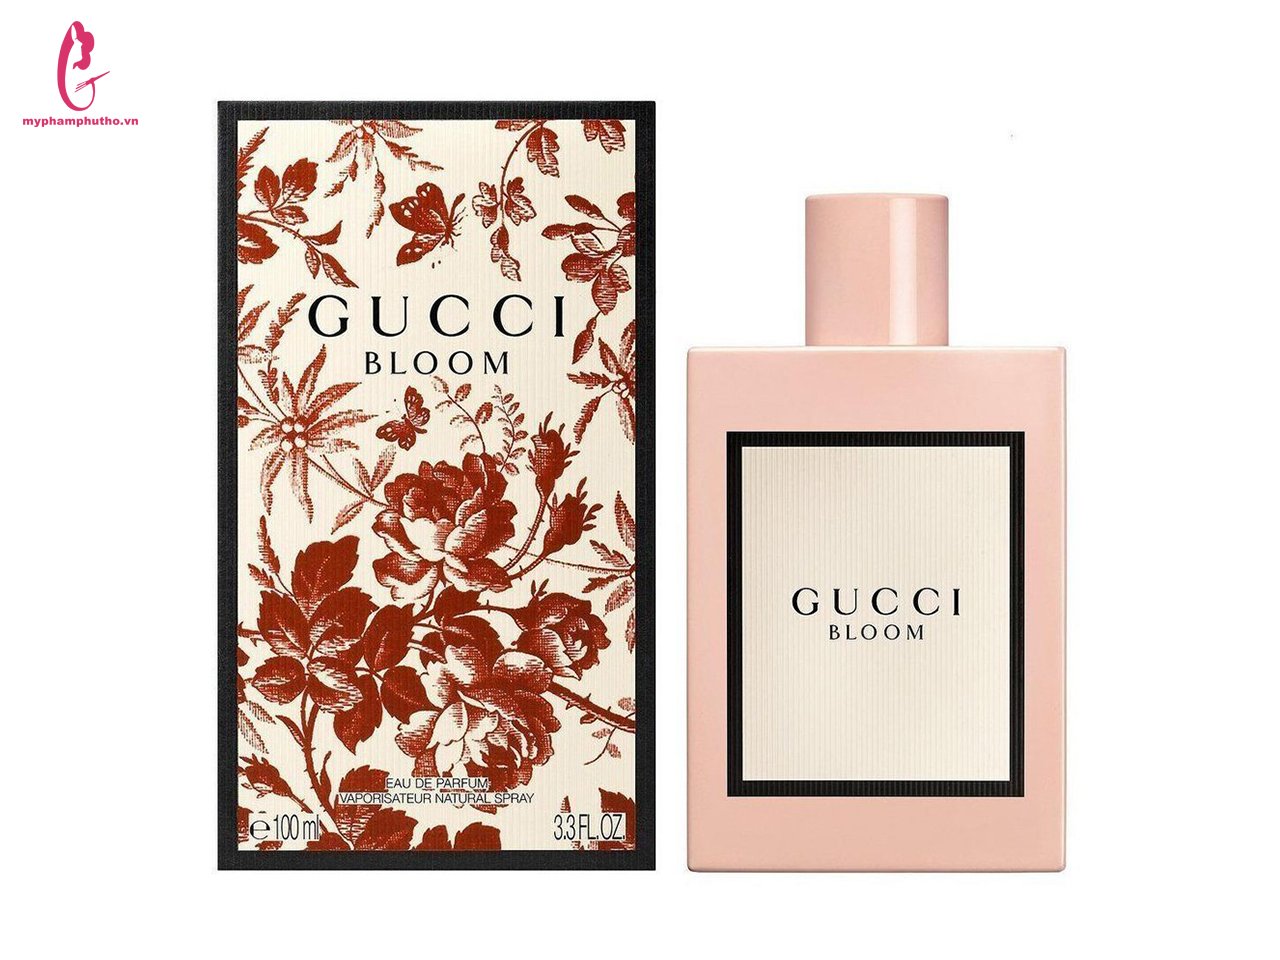 Nước Hoa Gucci Bloom Eau De Parfum Vaporisateur Natural Spray Hồng –  myphamphutho.vn